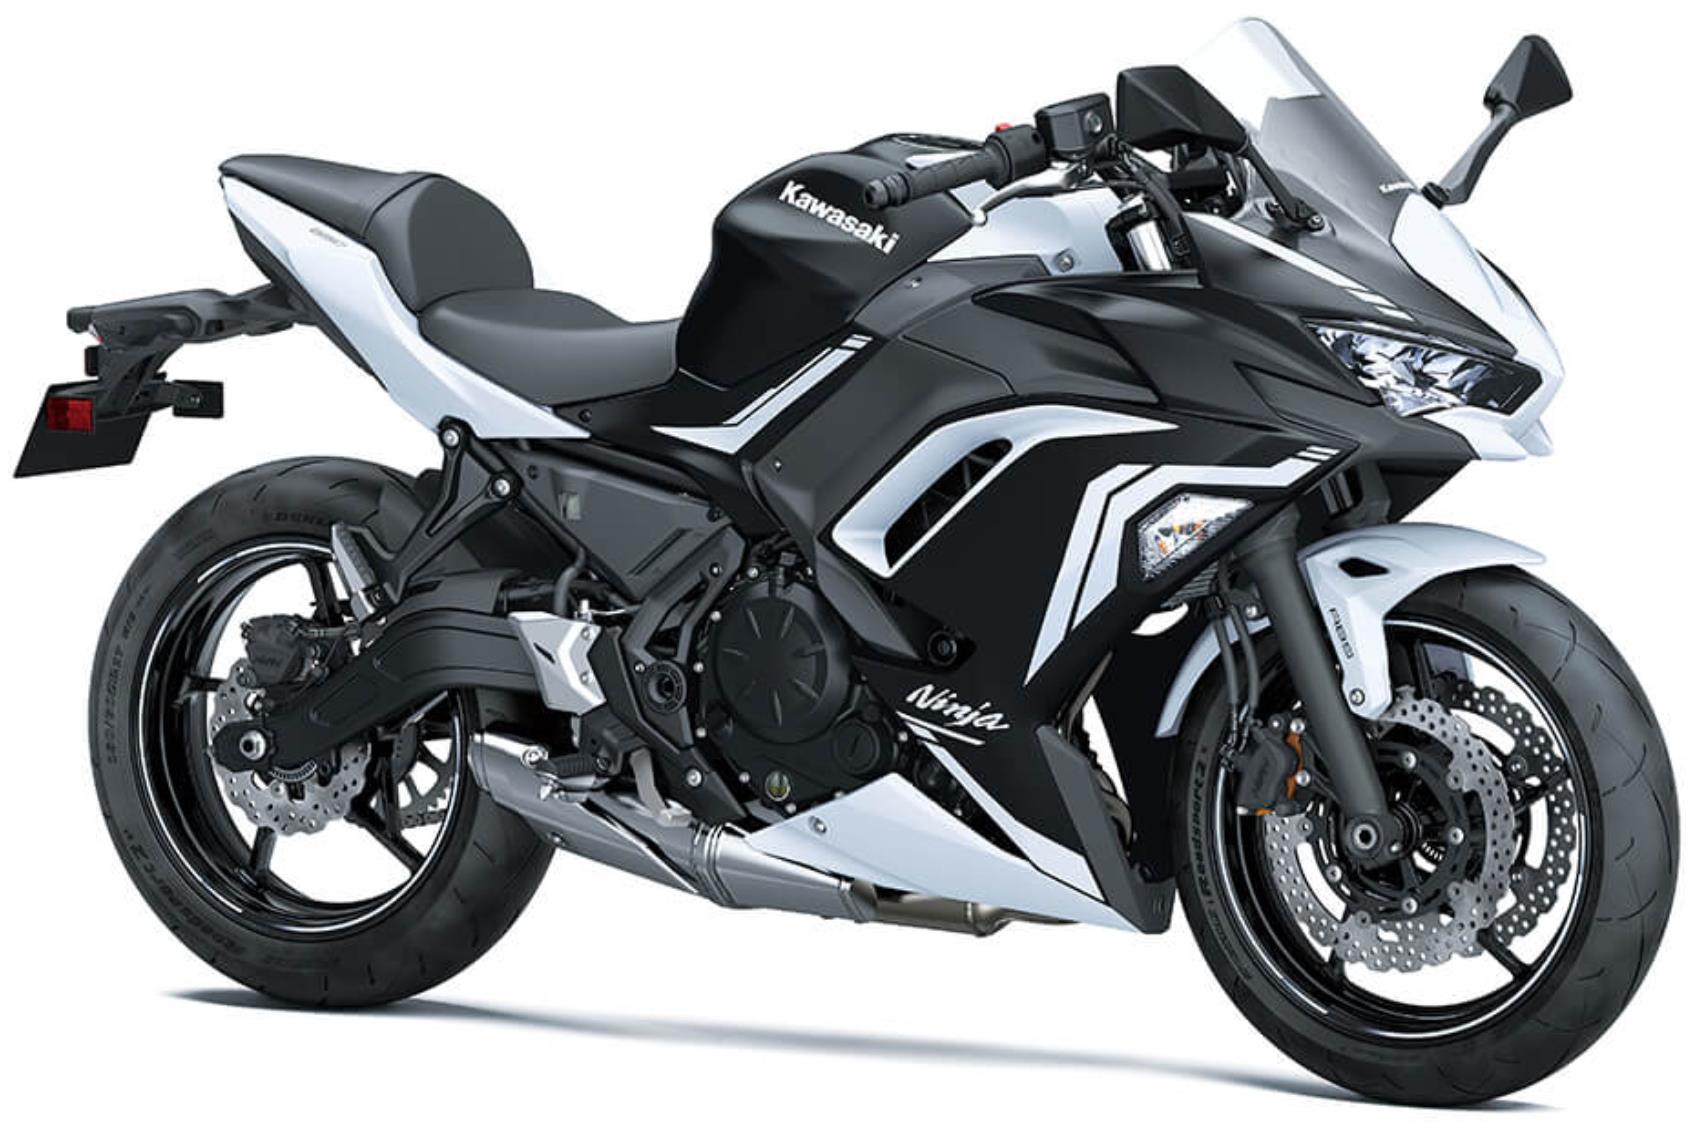 2022 Kawasaki Ninja 650 Price, Specs, Top Speed & Mileage in India